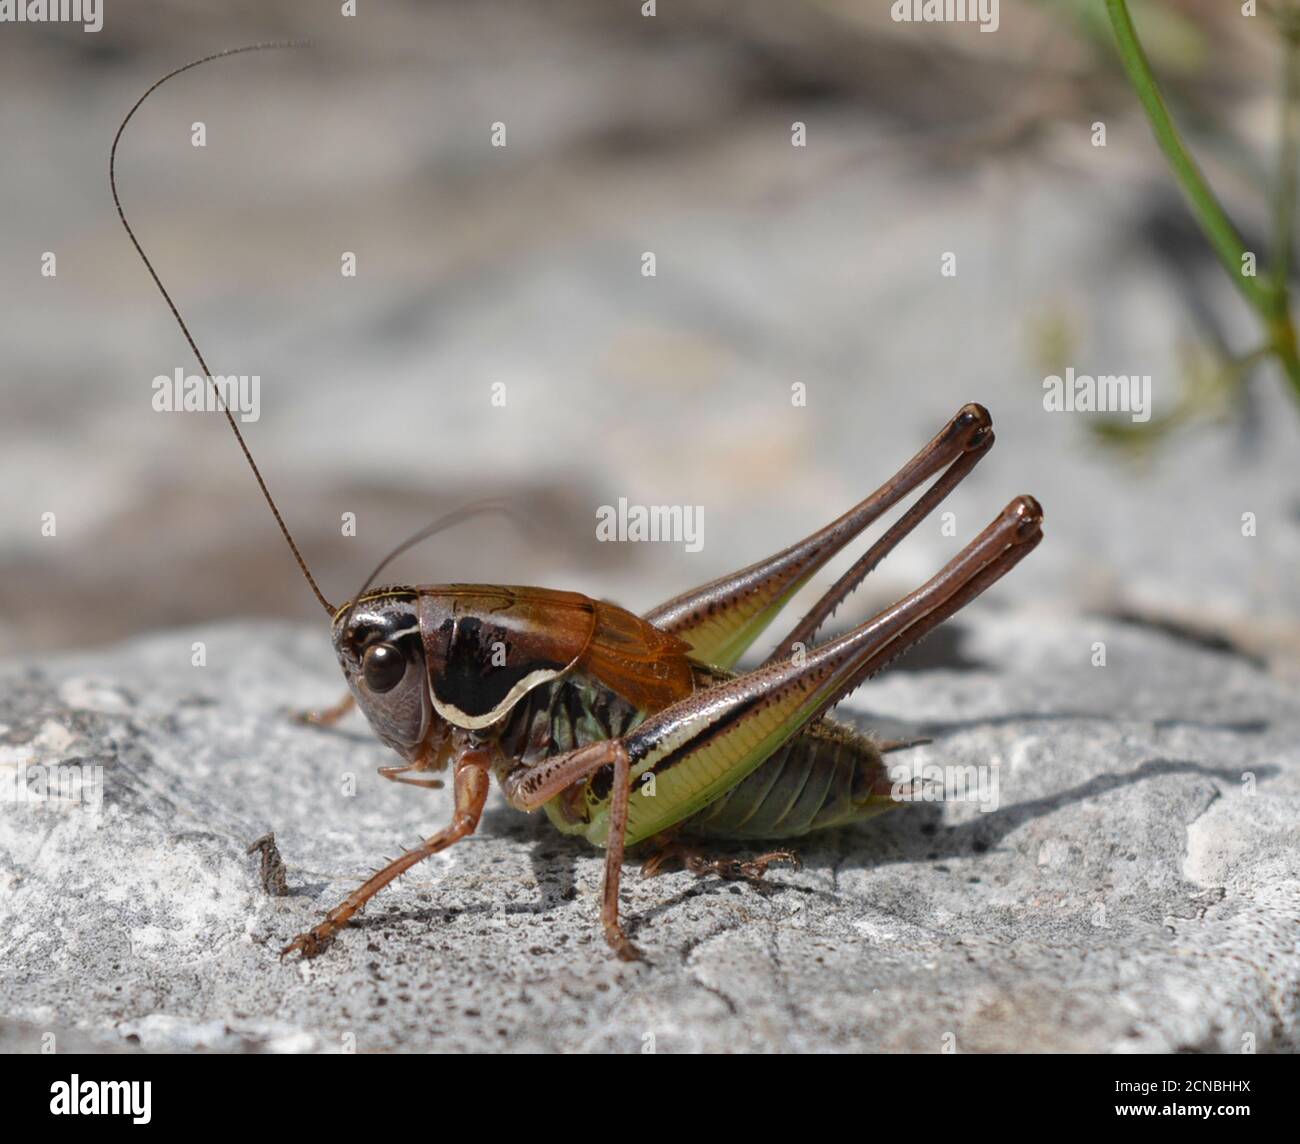 Grasshopper on the ground Stock Photo